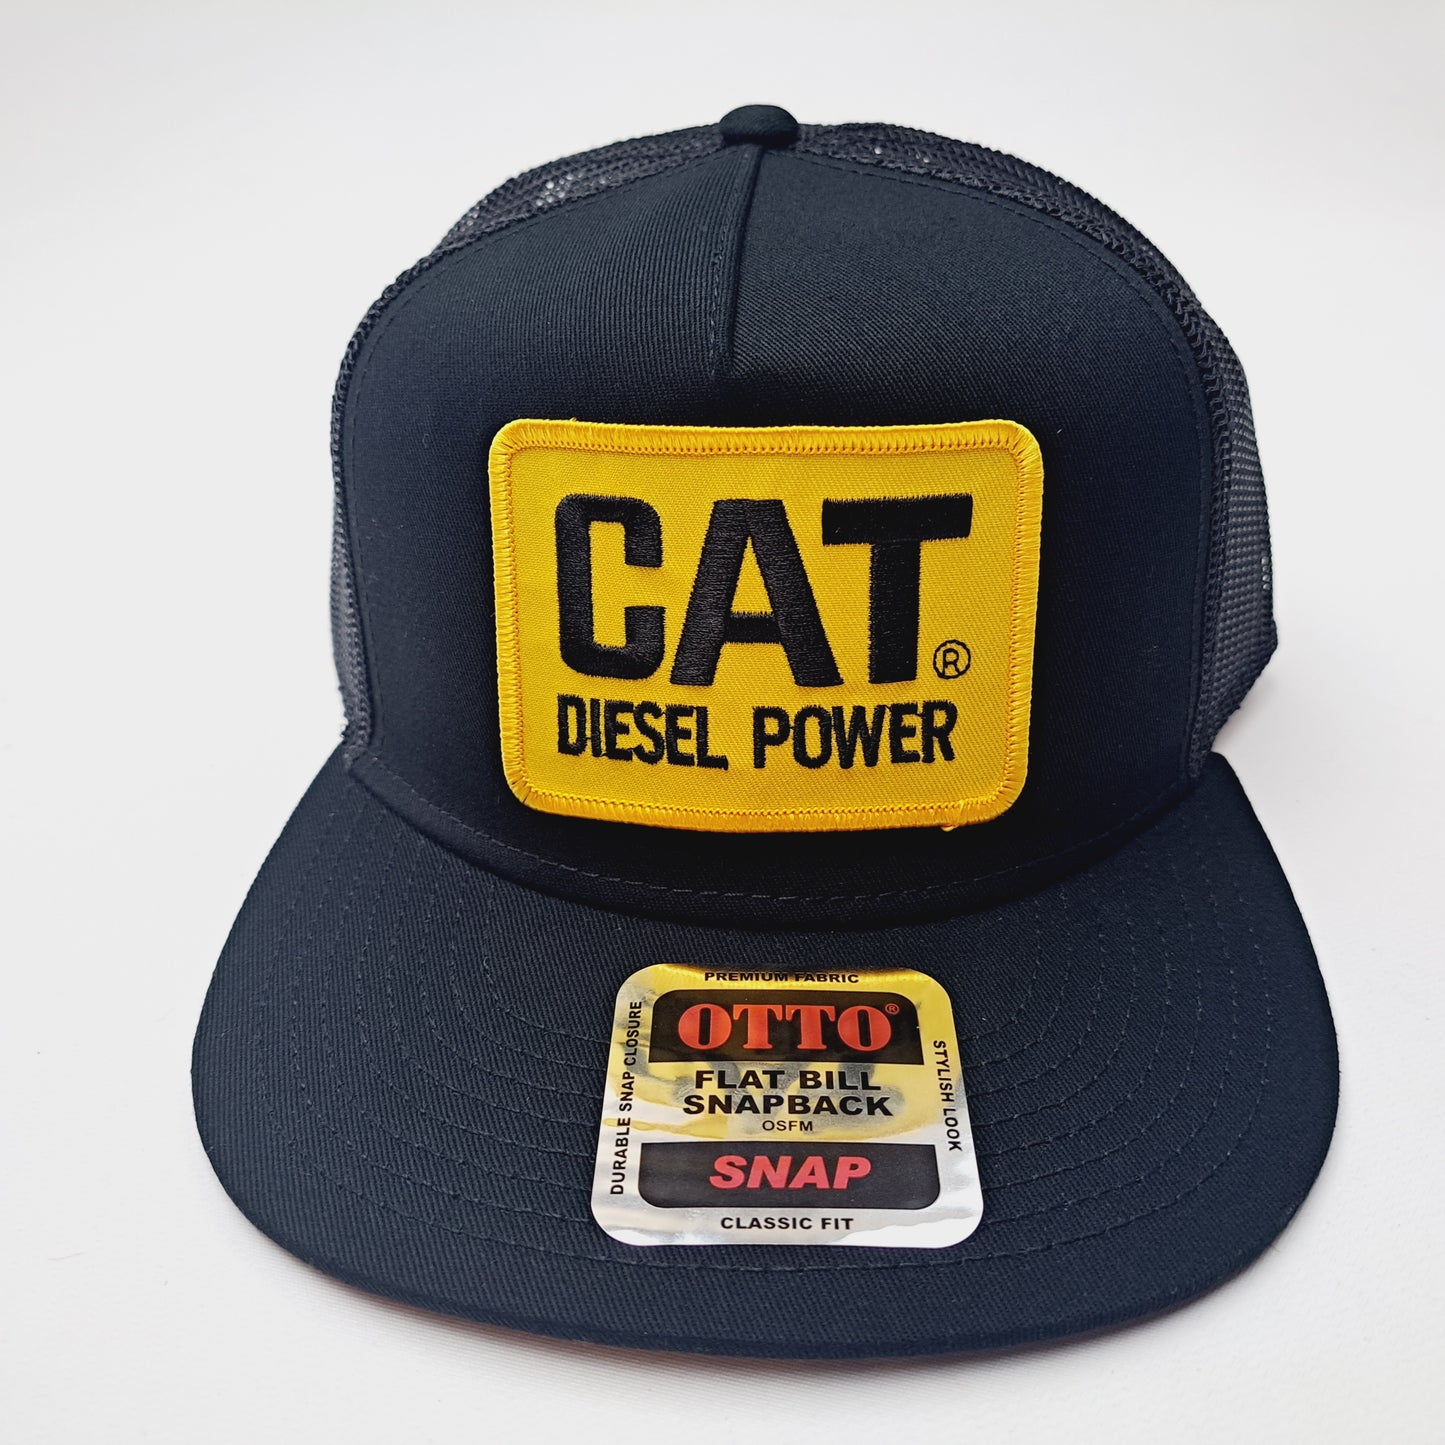 Cat Diesel Power Embroidered Patch Flat bill Trucker Mesh Snapback Cap OTTO